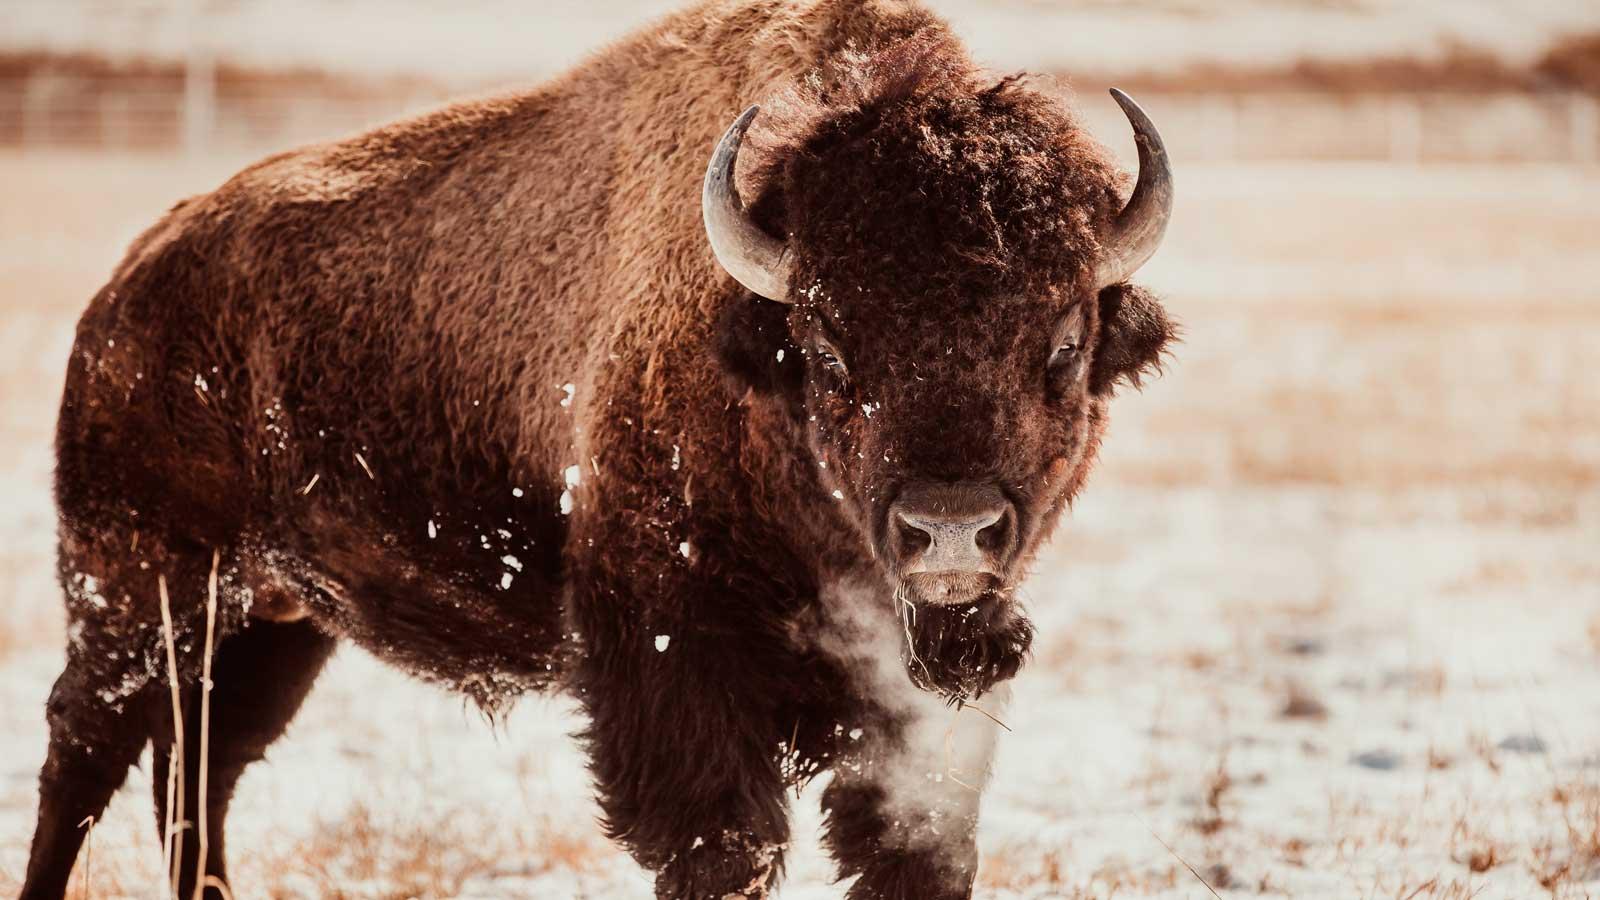 Bison in snowy field